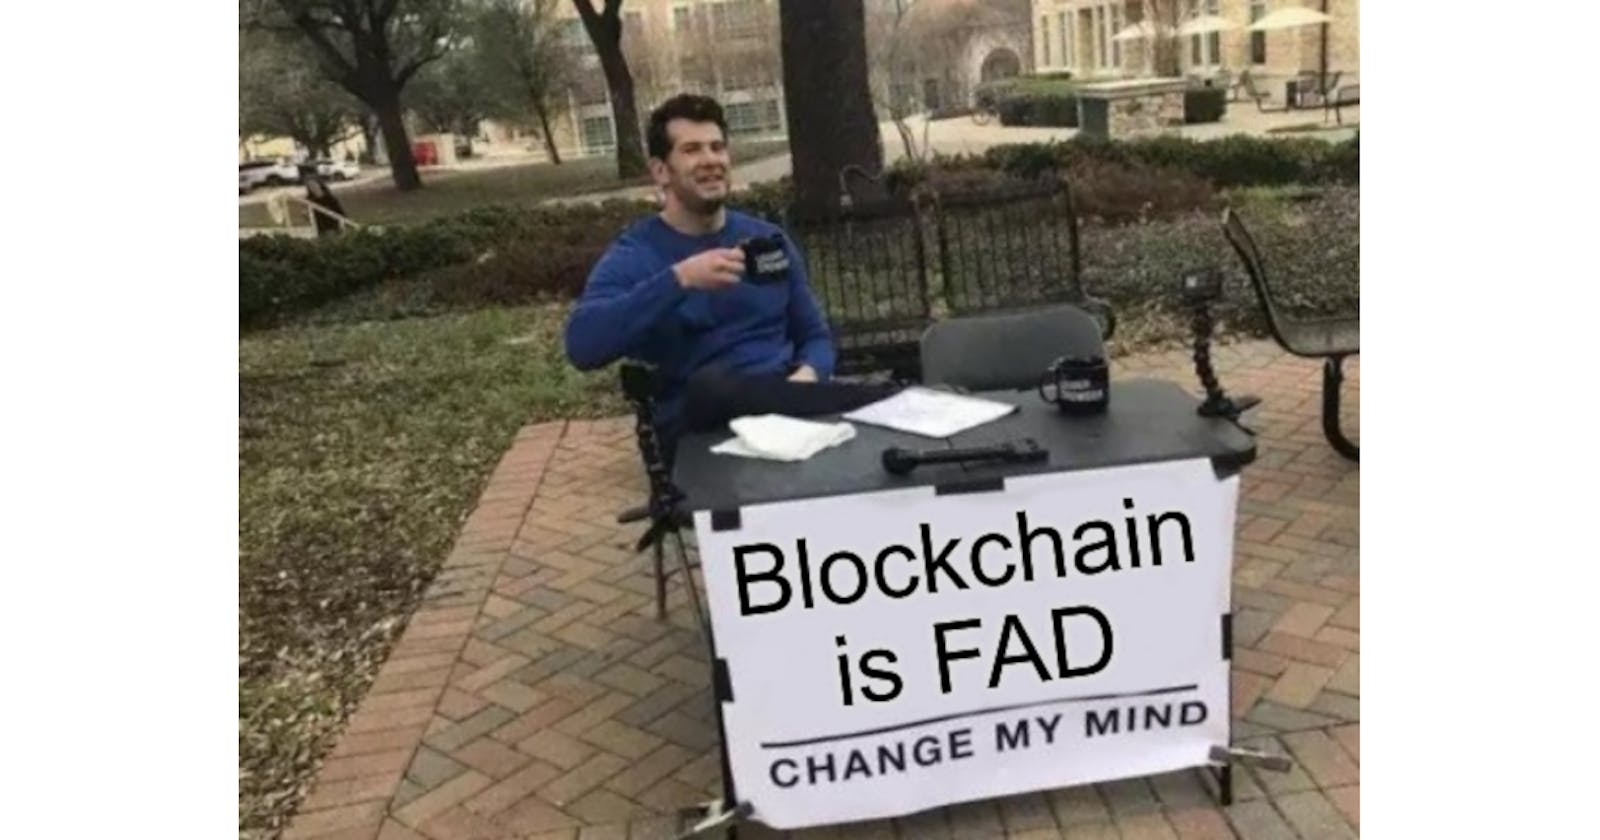 Blockchain is FAD